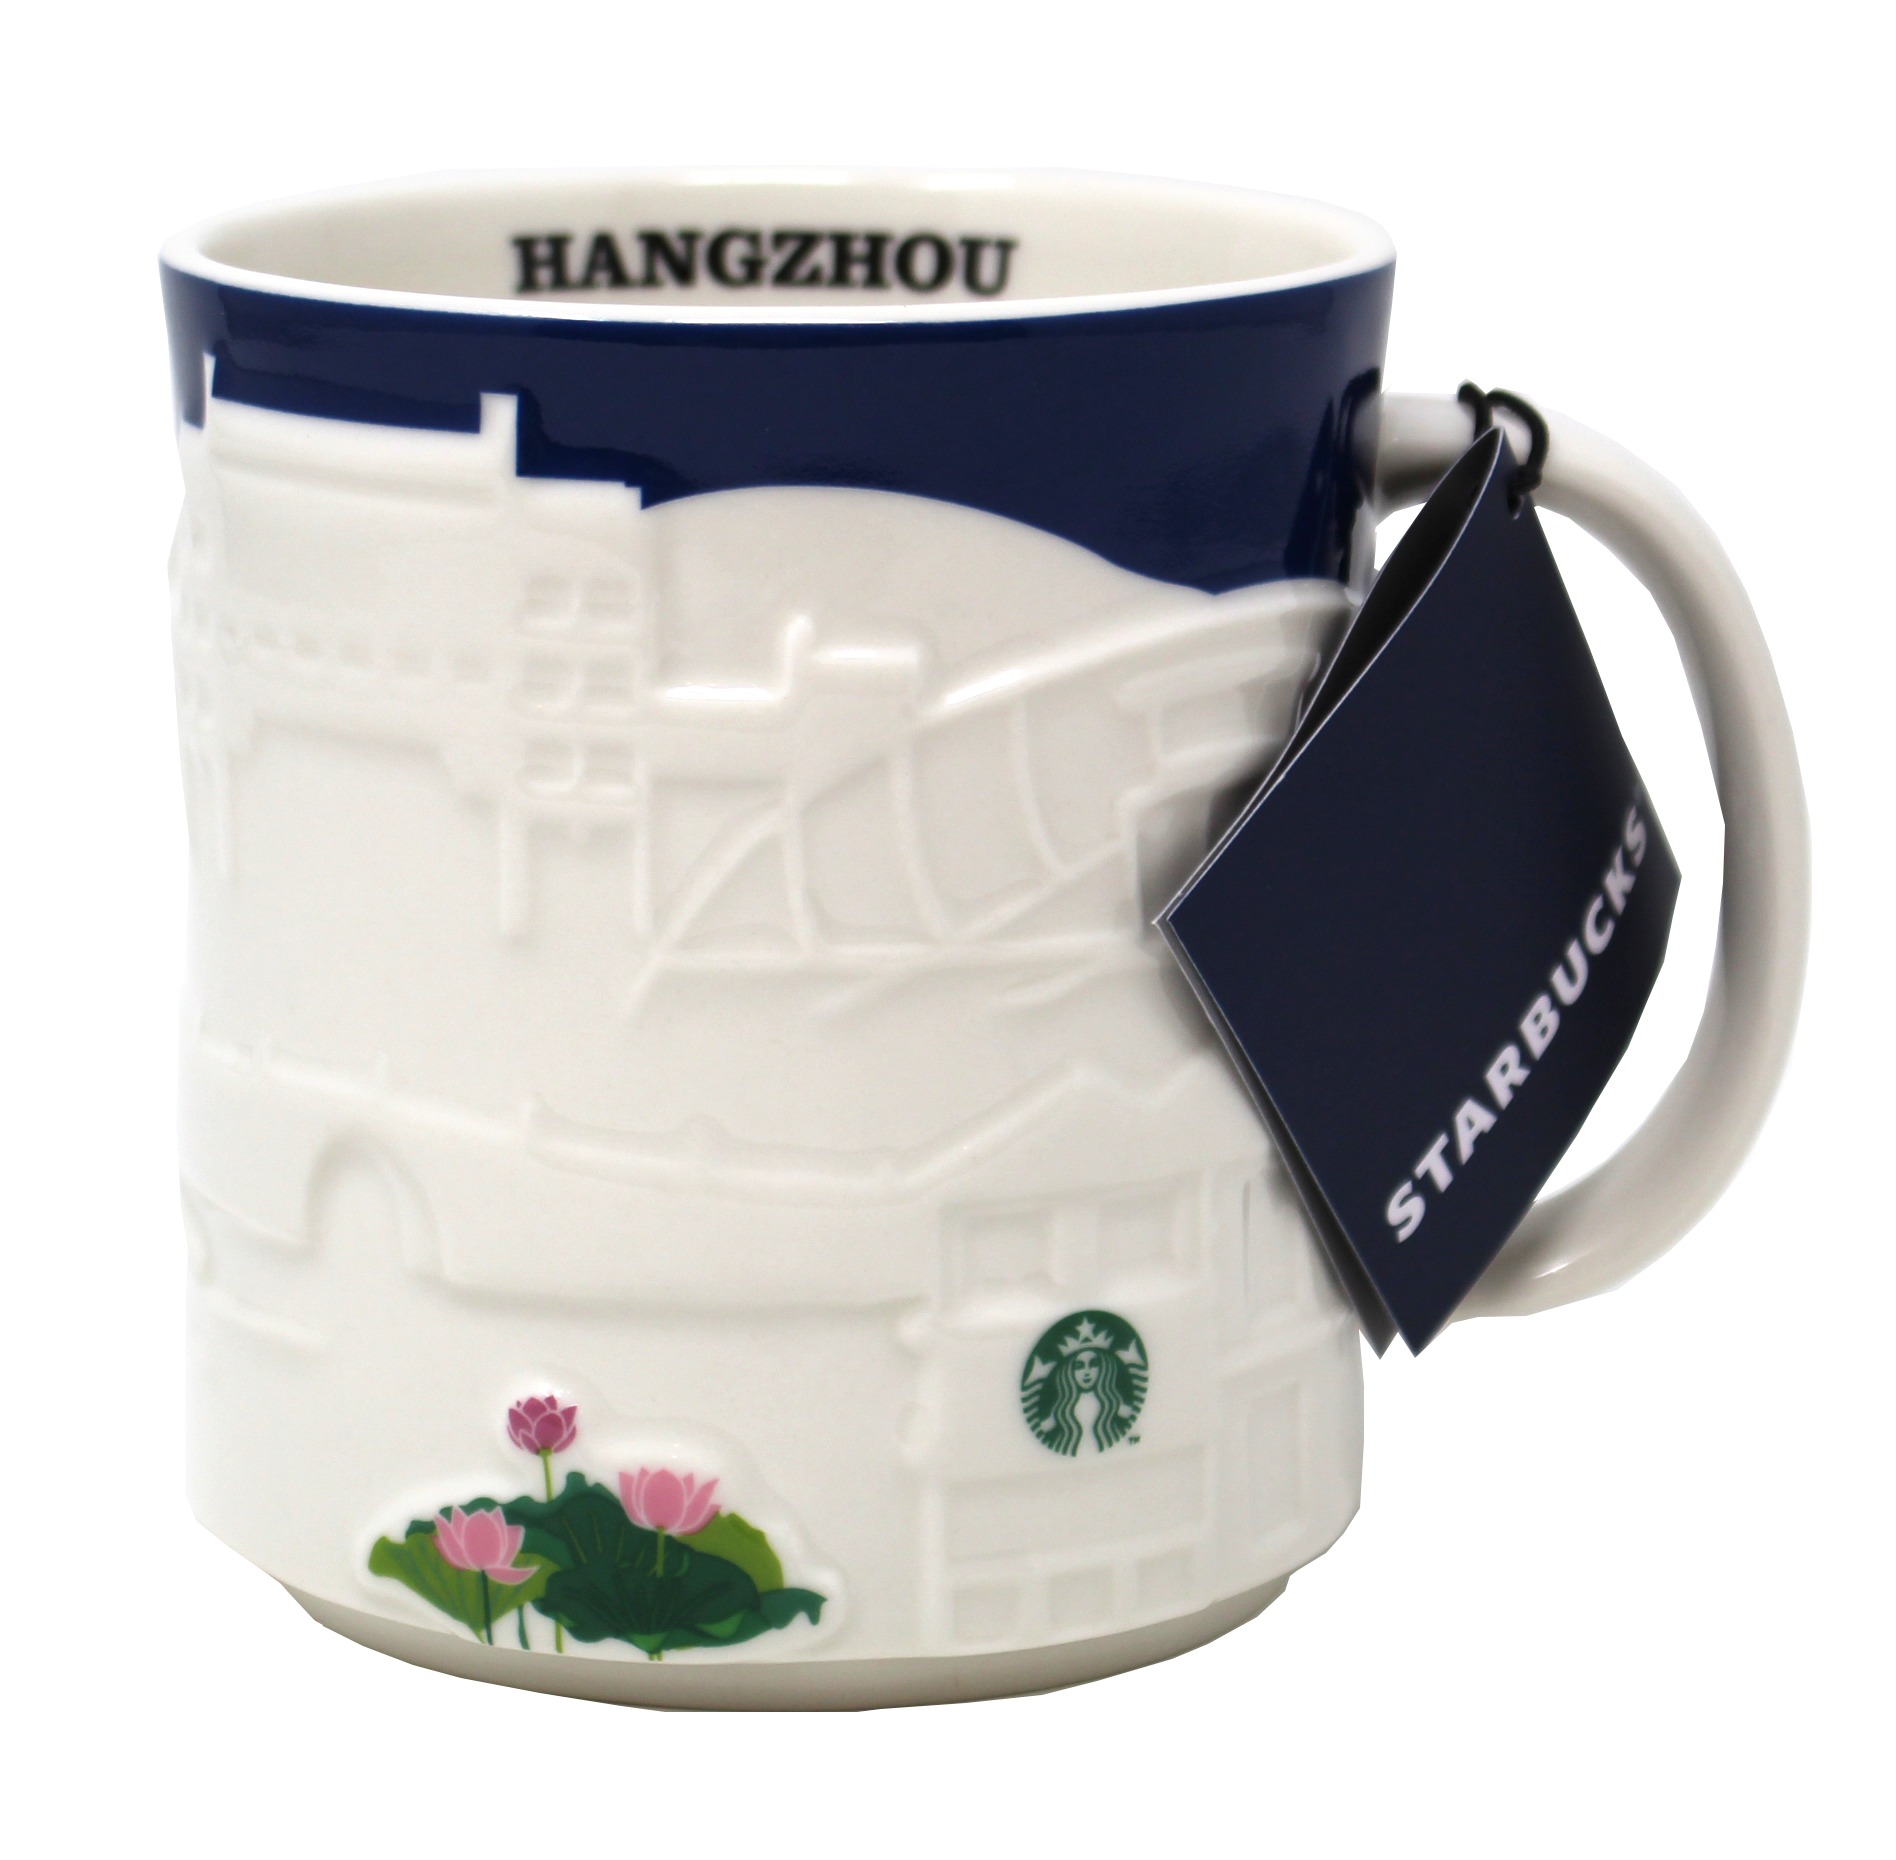 Starbucks Collector Relief Series Hangzhou Ceramic Mug, 16 Oz